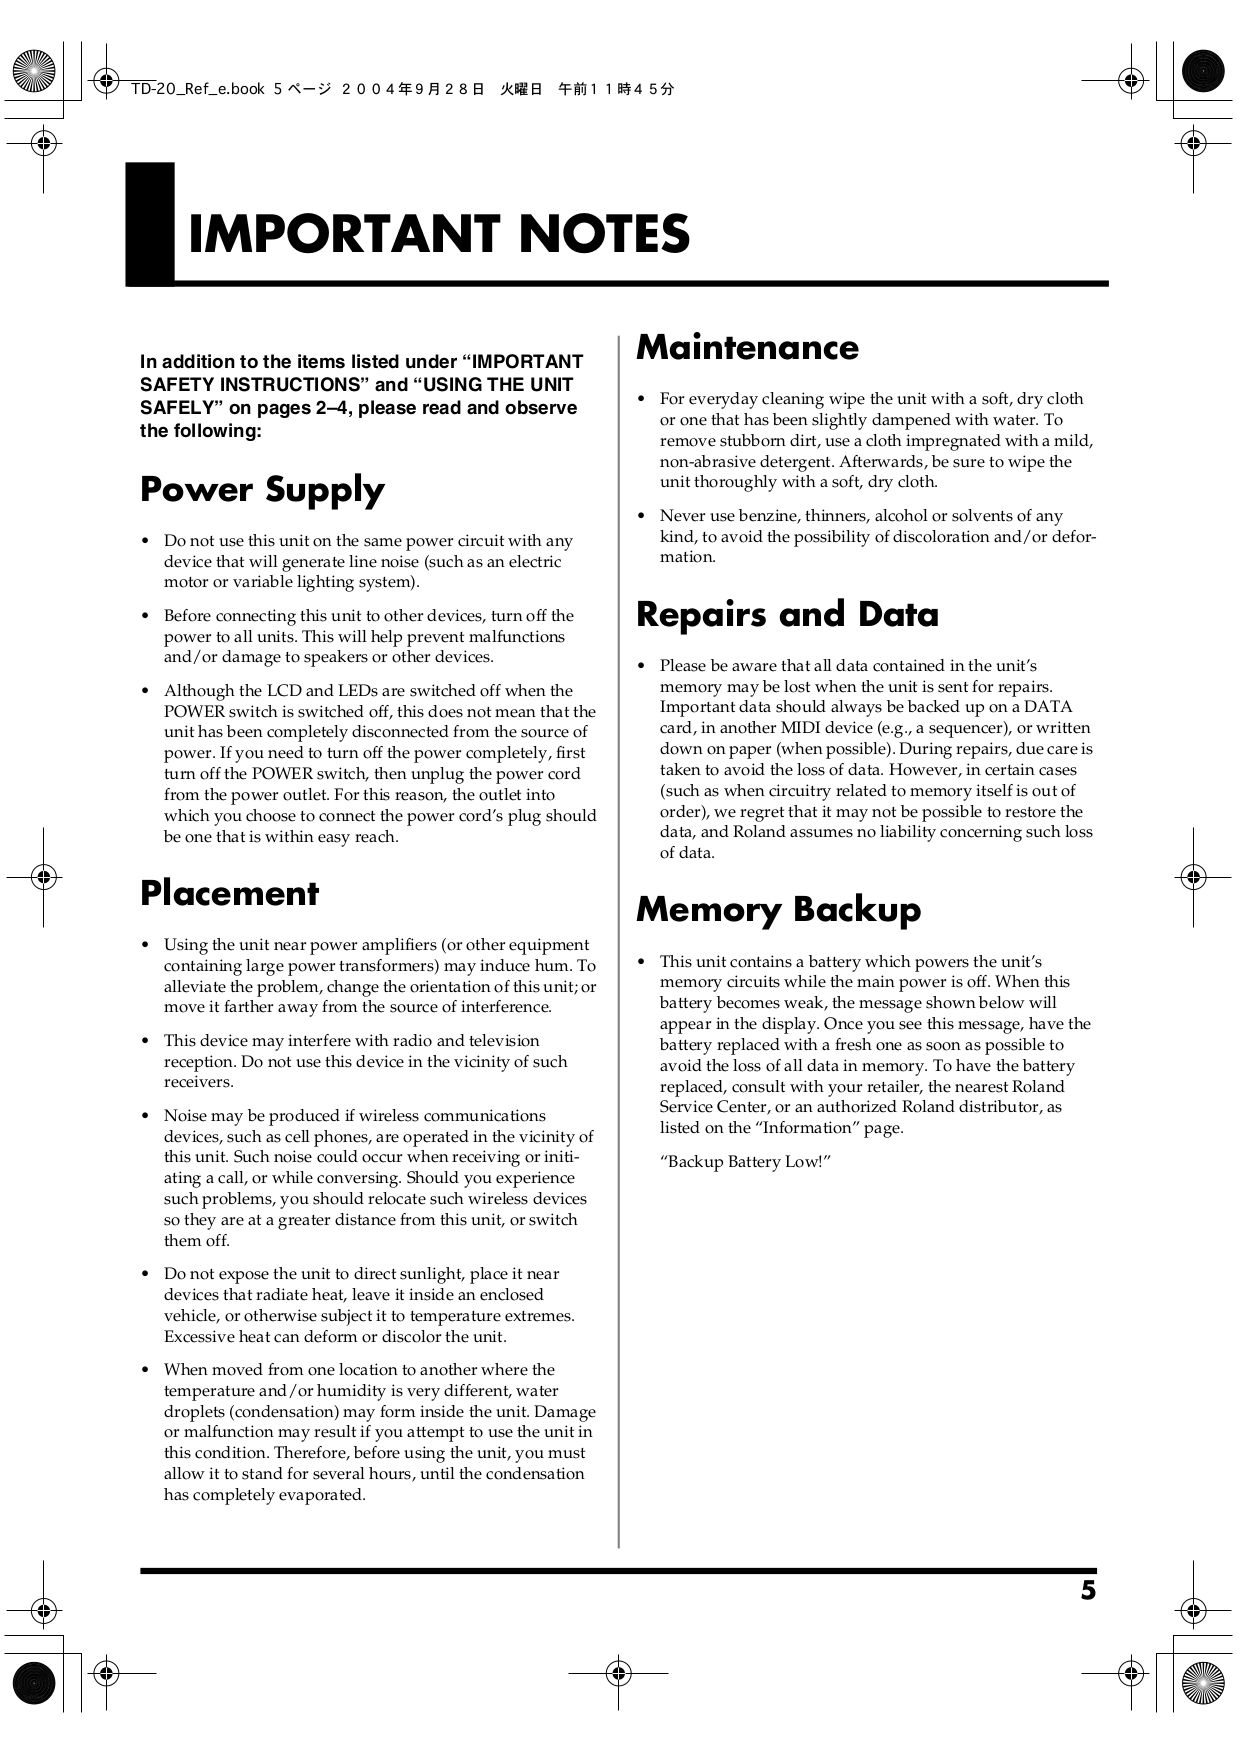 roland fantom x8 manual pdf